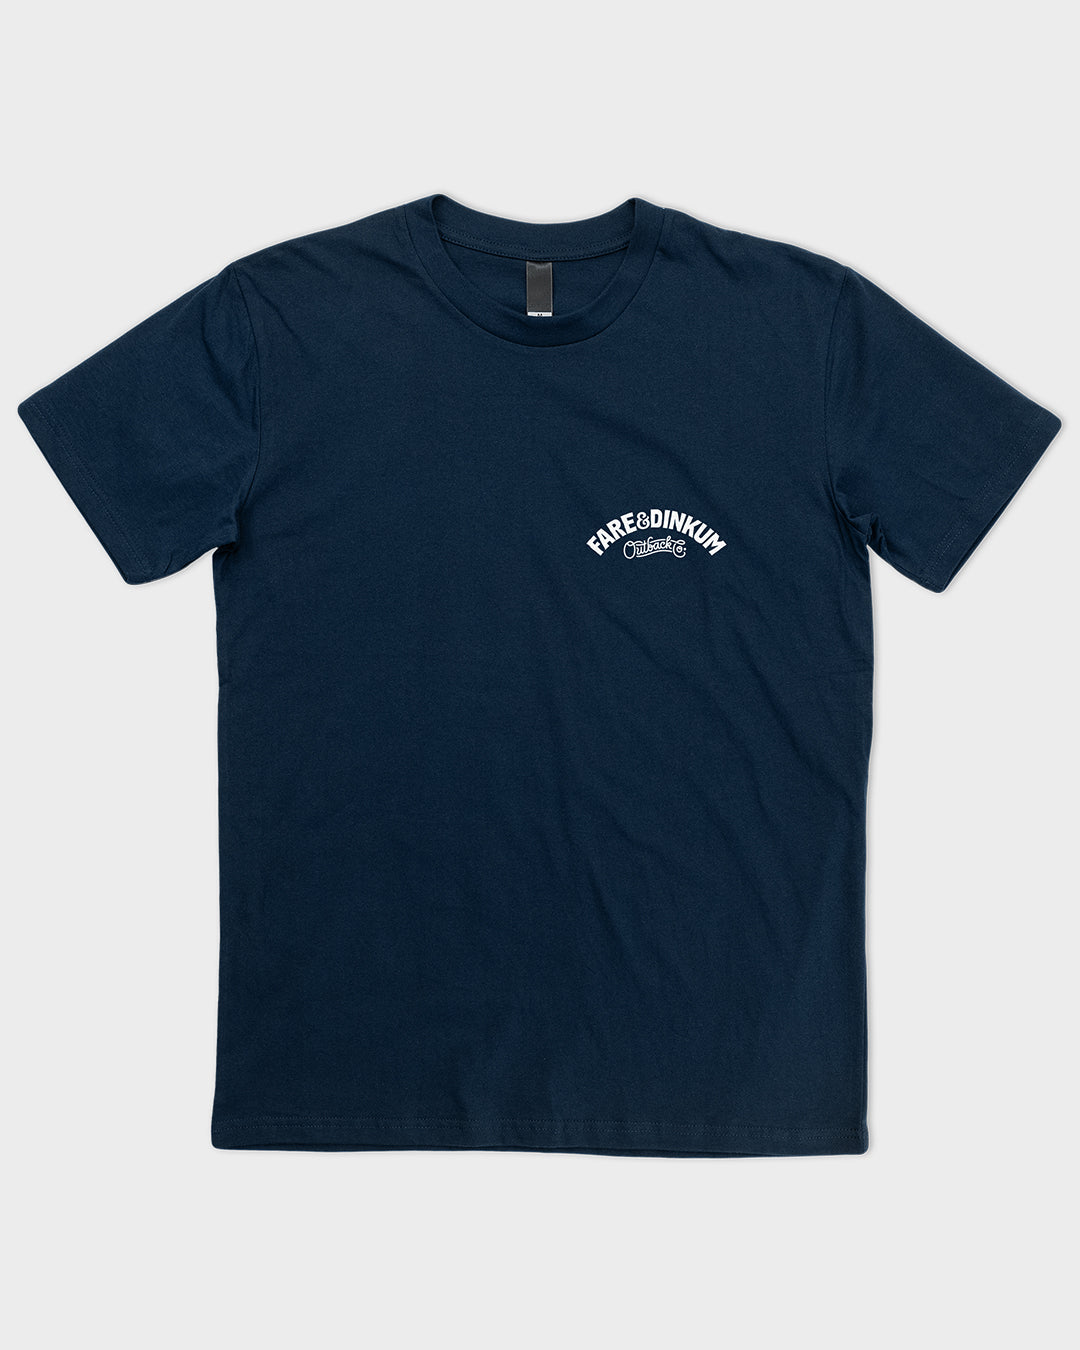 Trademark Unisex T-Shirt Navy